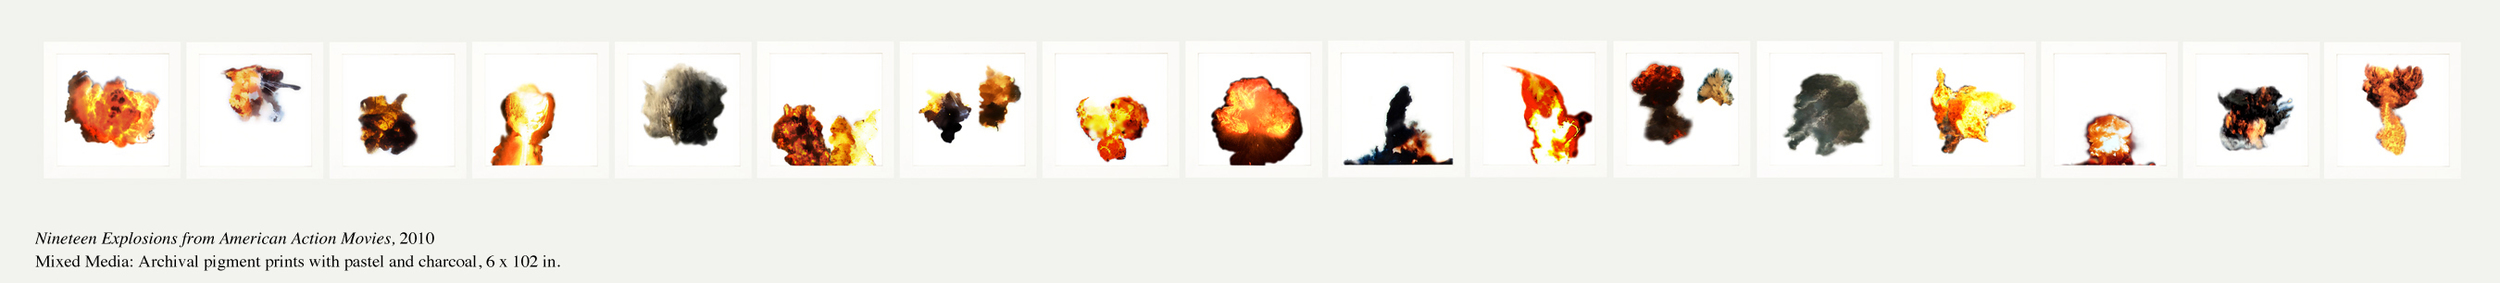 Nineteen Explosions for website.jpg